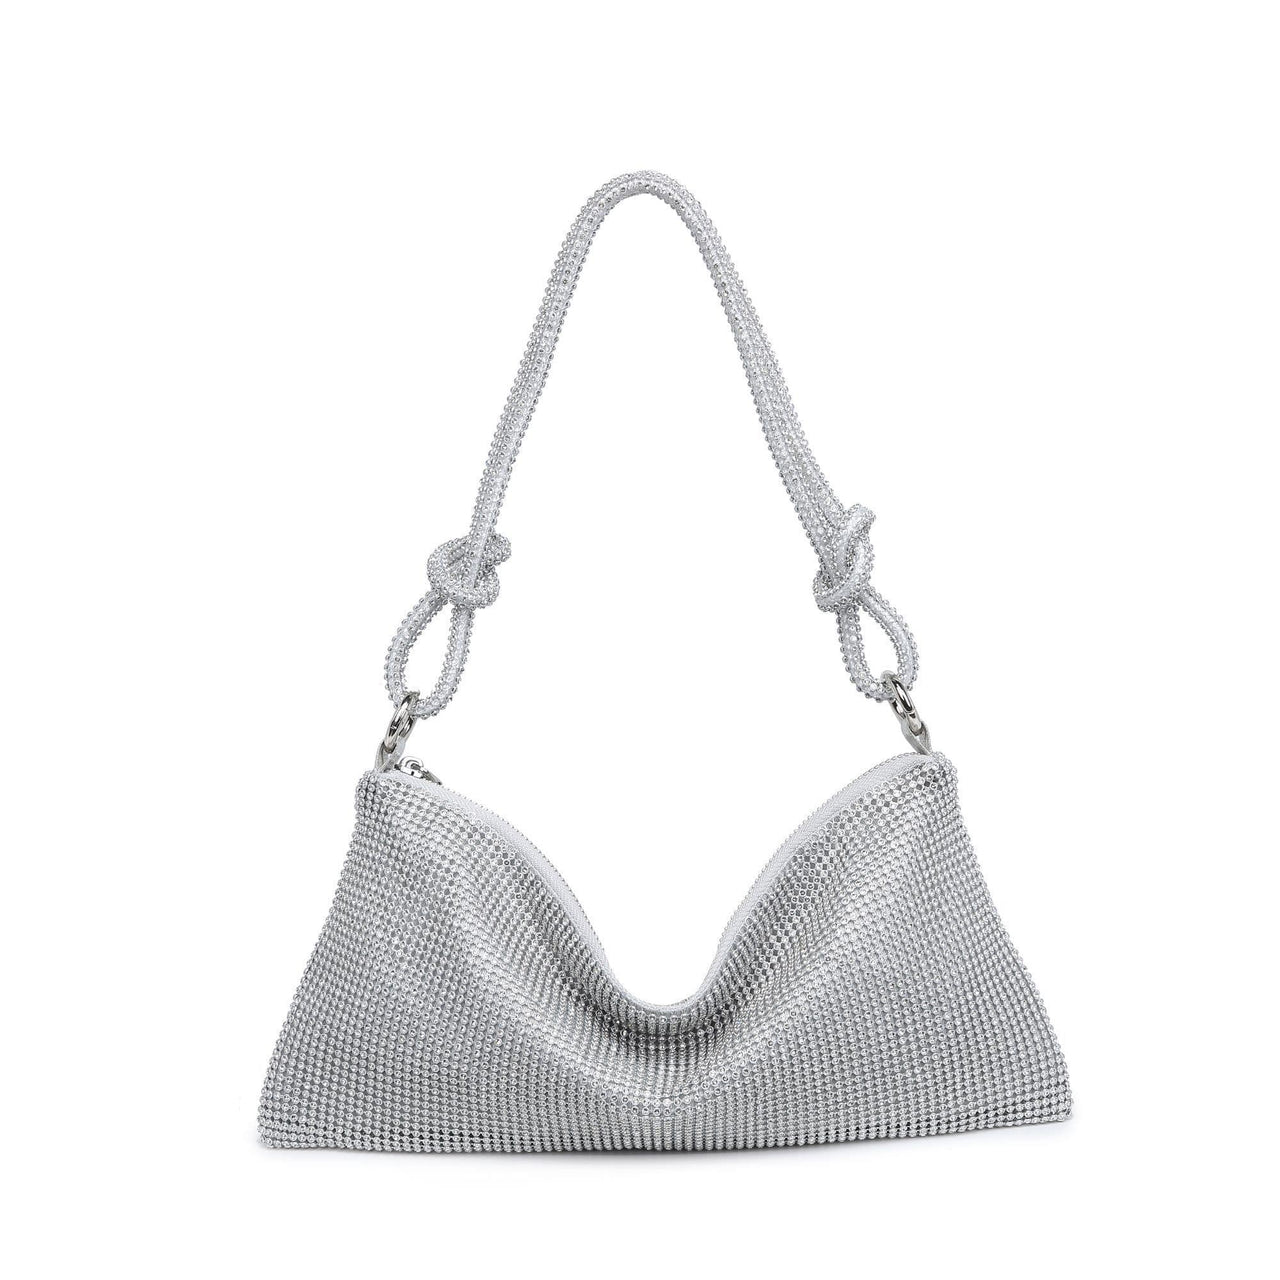 Paris Handbag Silver, Bag by Urban Expressions | LIT Boutique